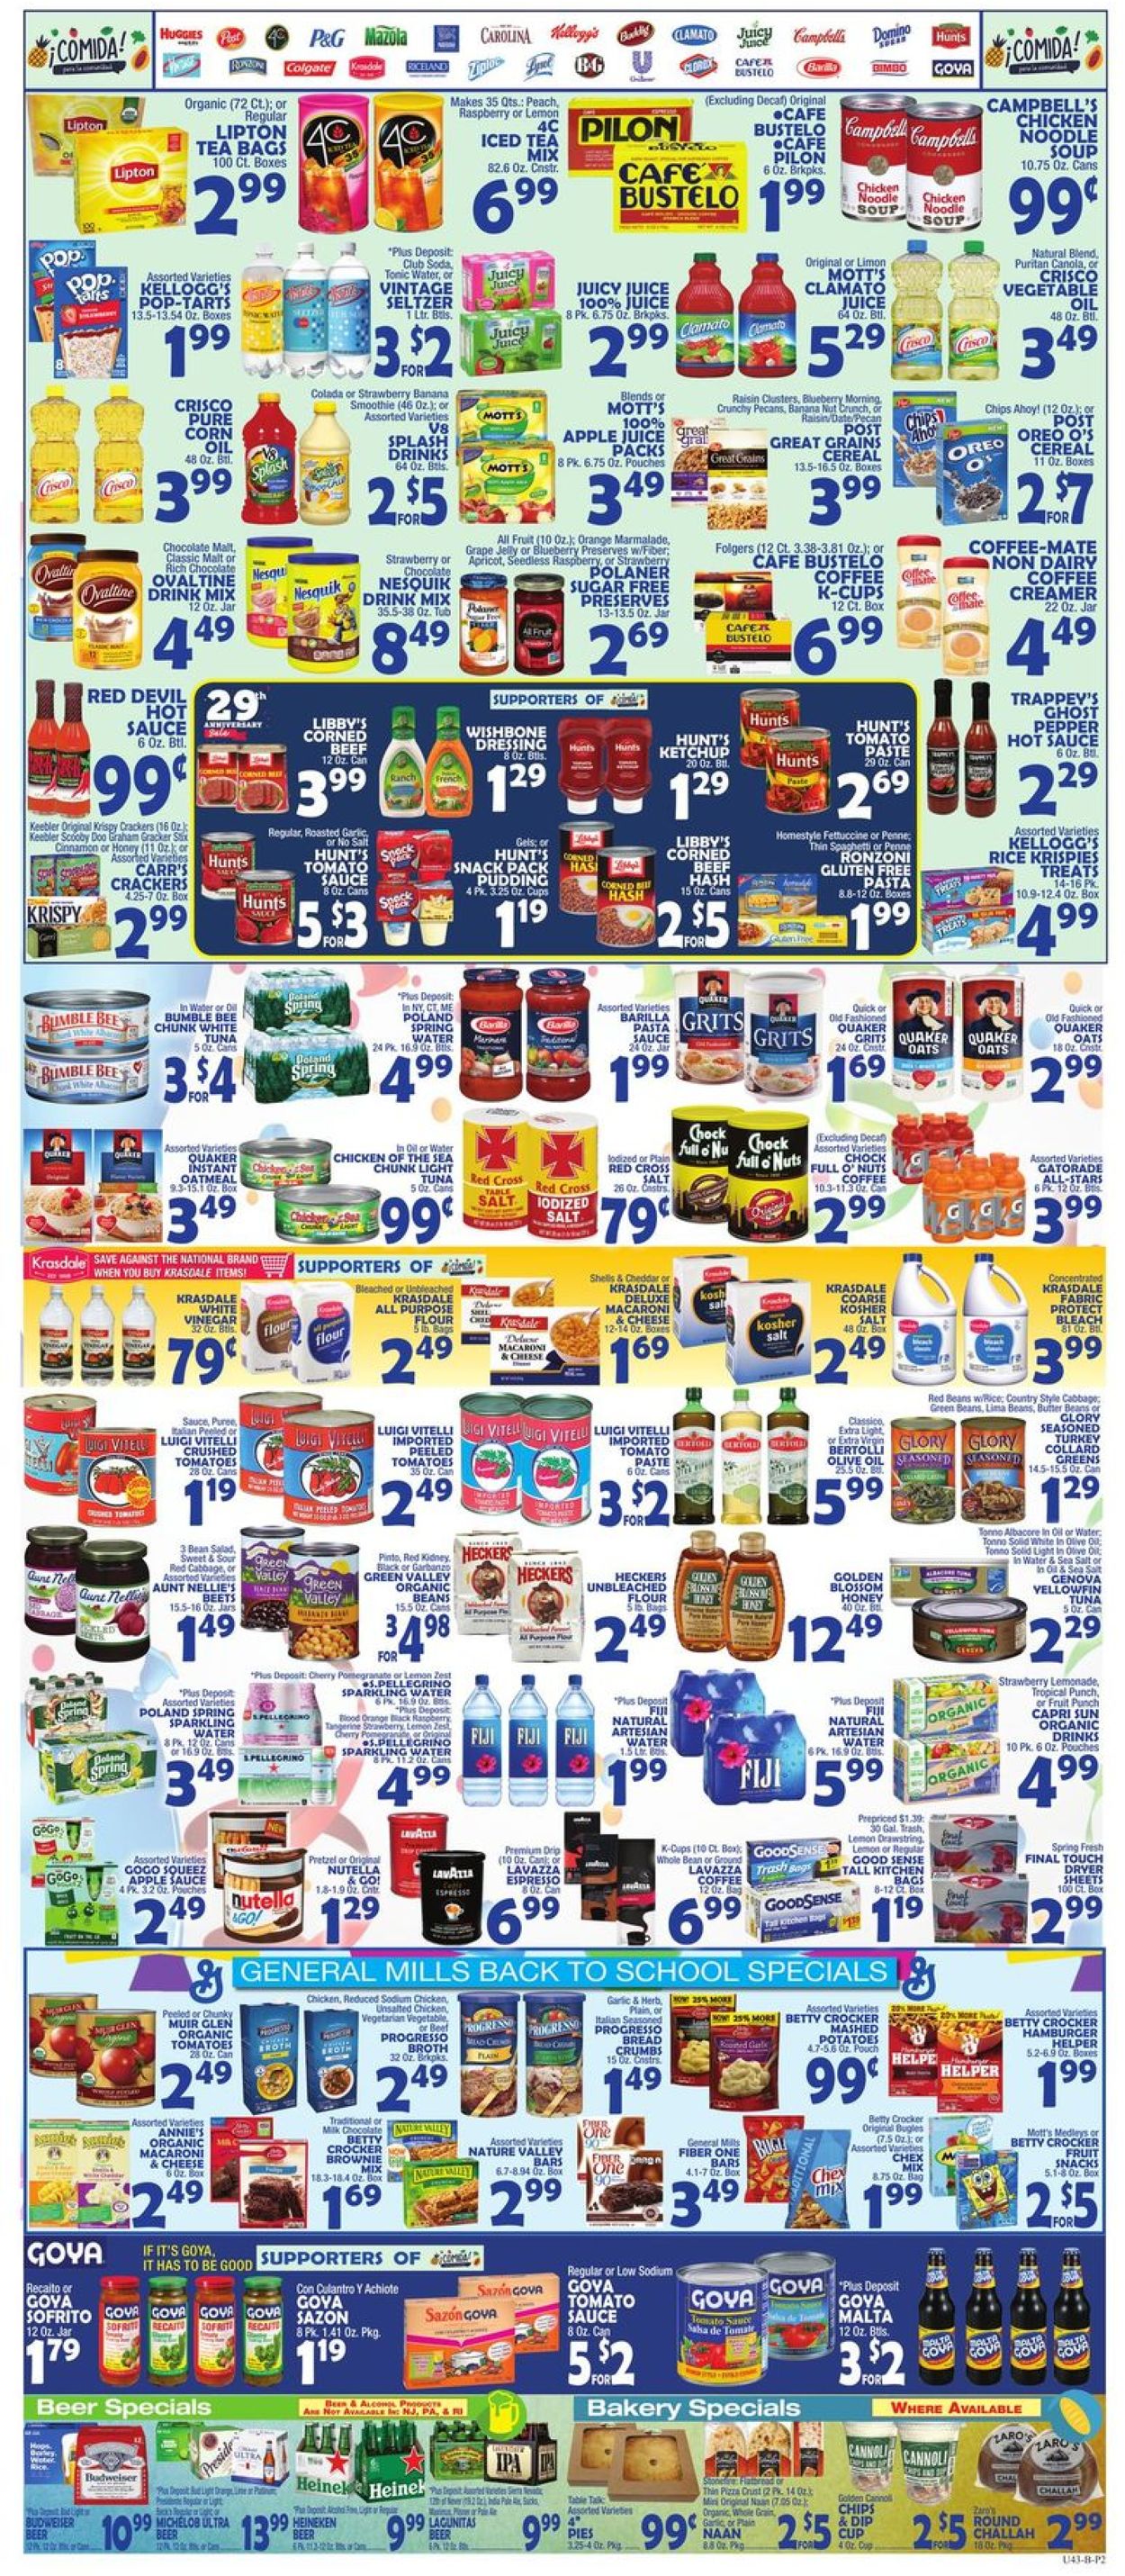 Catalogue Bravo Supermarkets from 09/11/2020